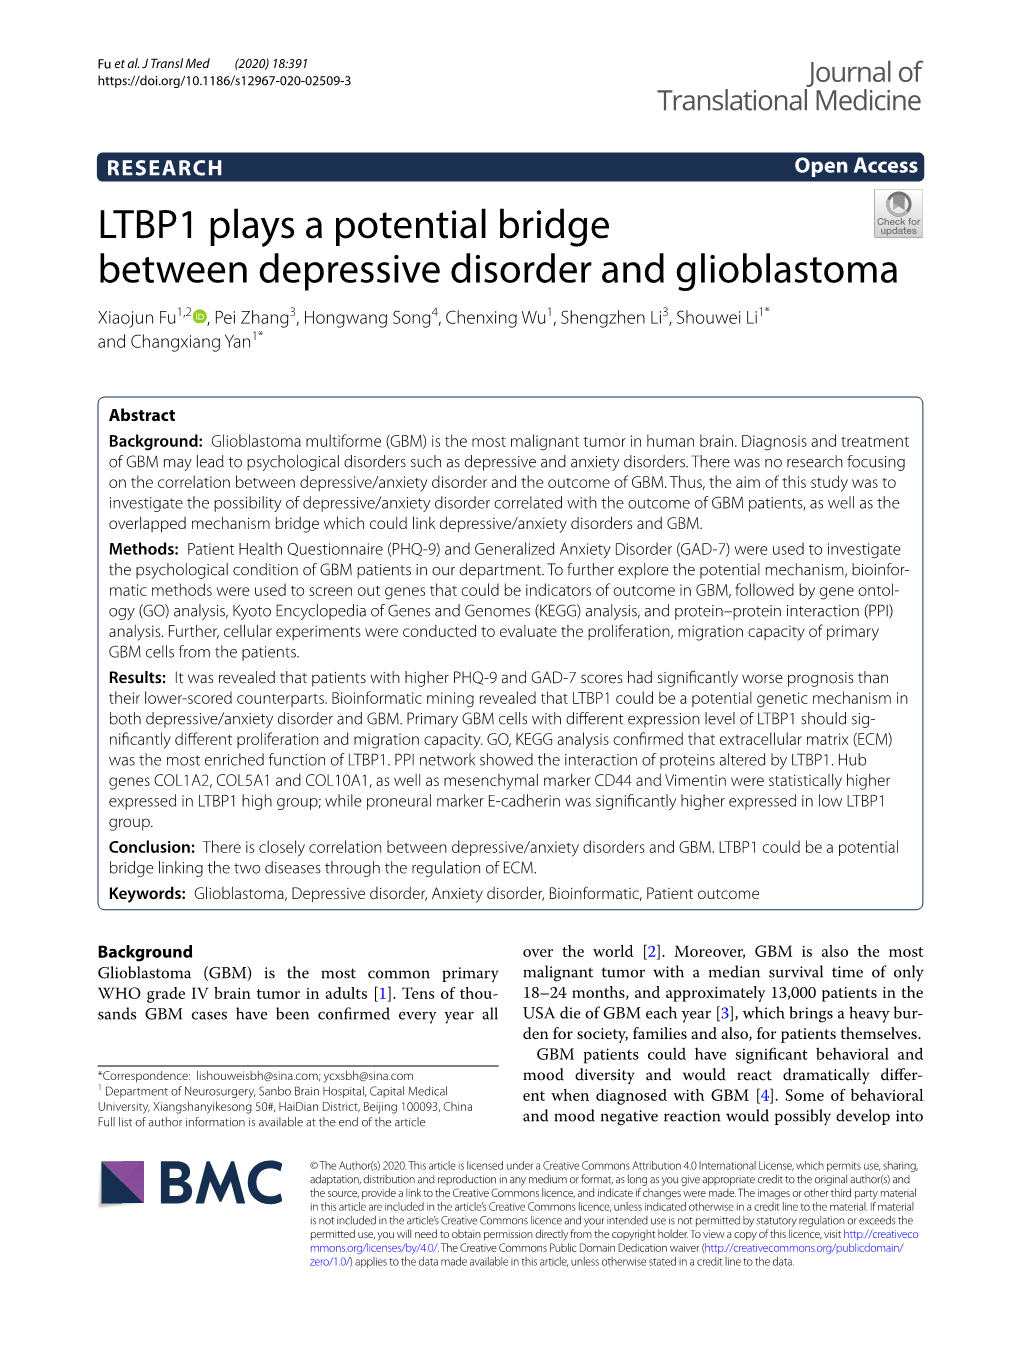 LTBP1 Plays a Potential Bridge Between Depressive Disorder And